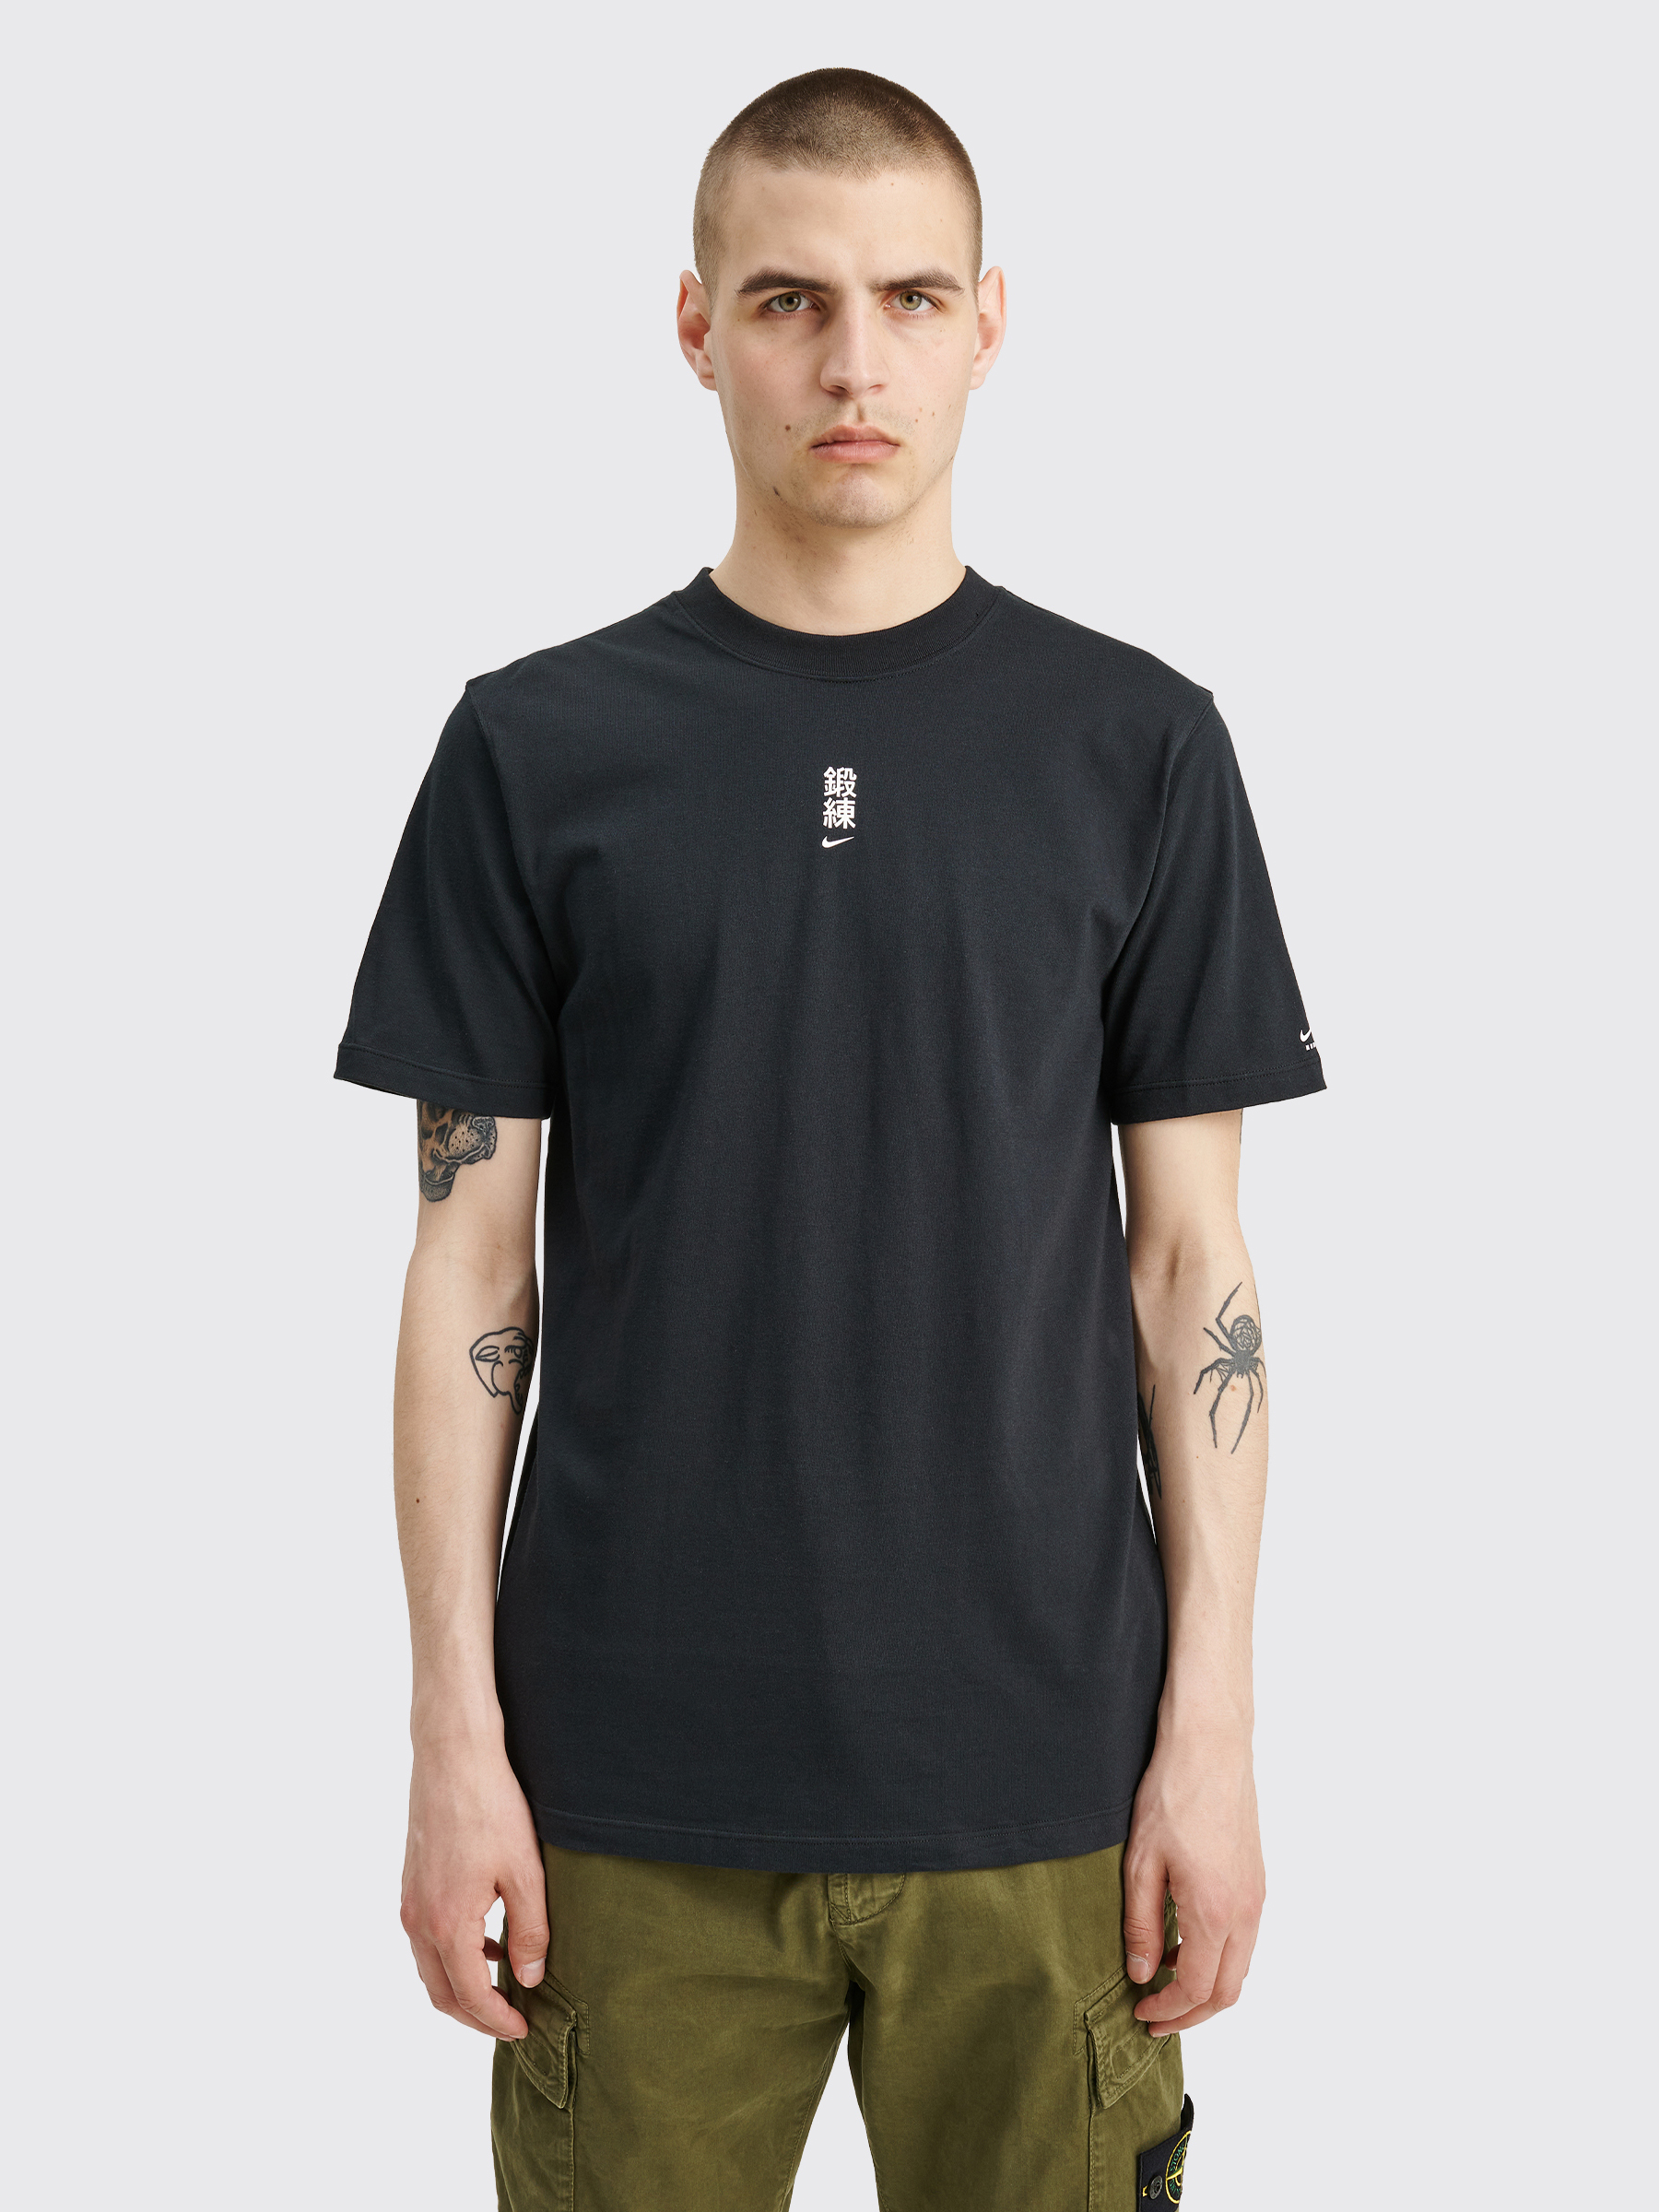 Très Bien - Nike x MMW T-shirt Black